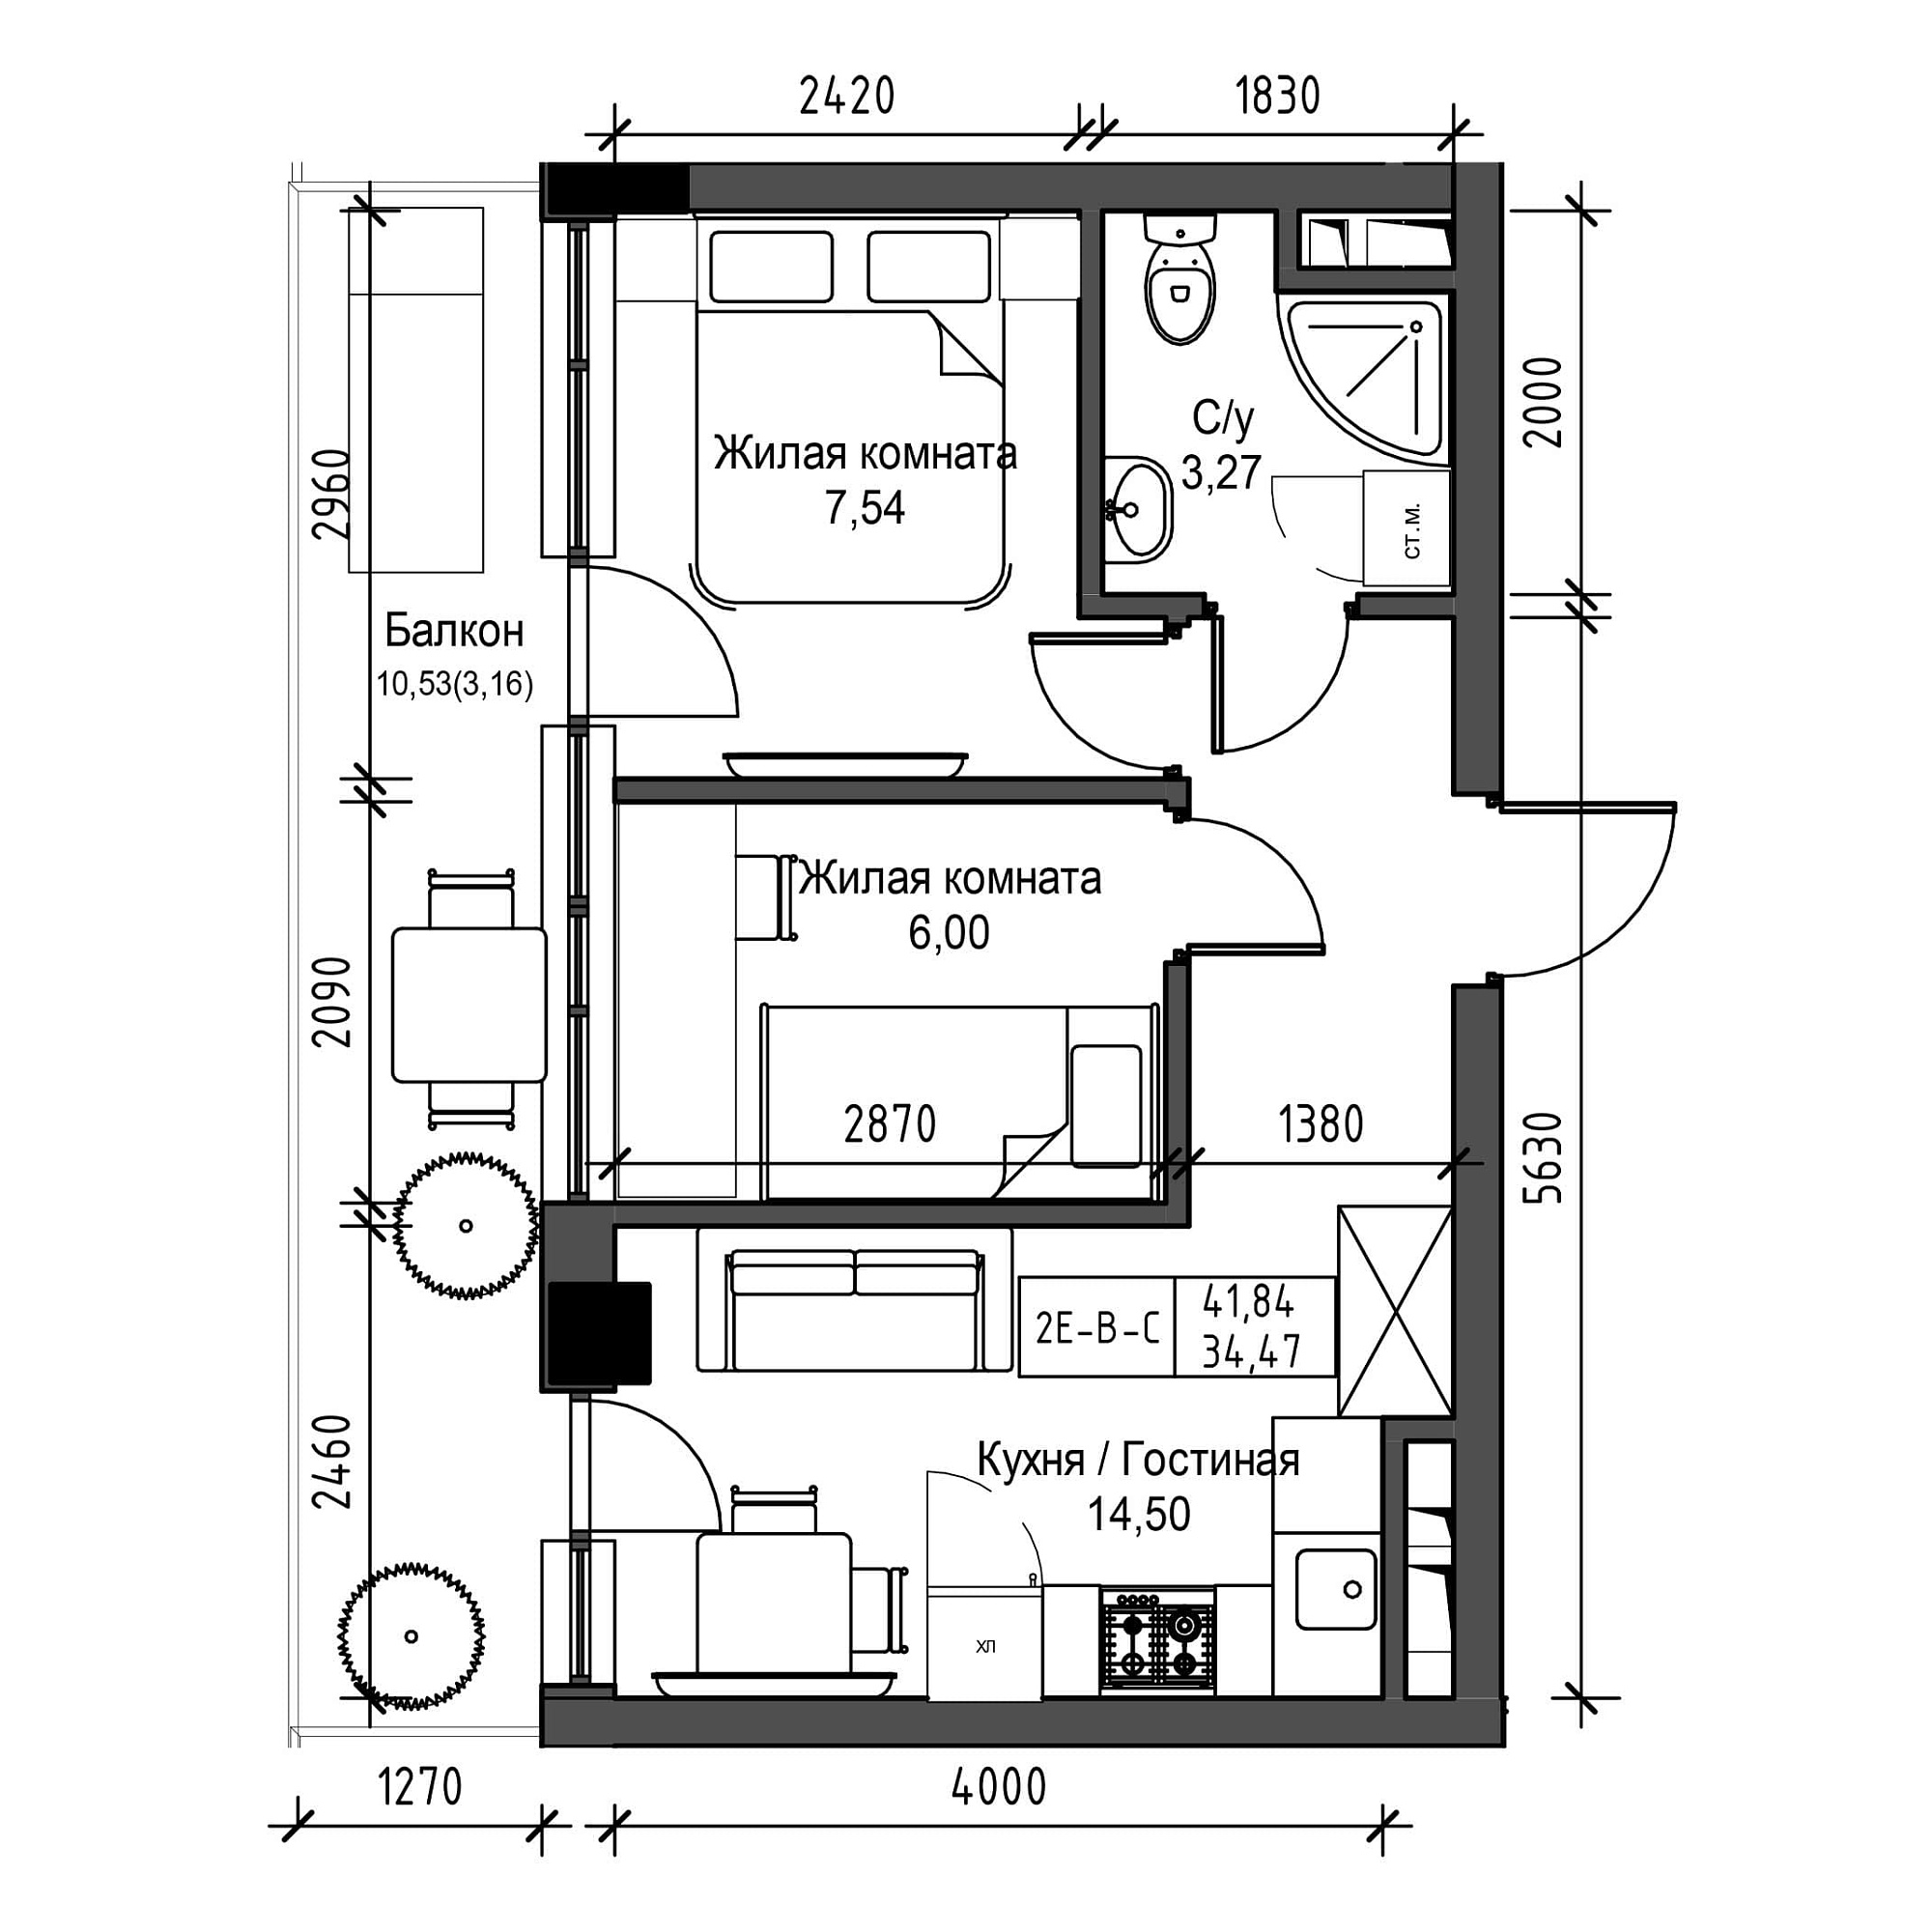 Planning 2-rm flats area 34.47m2, UM-001-08/0012.